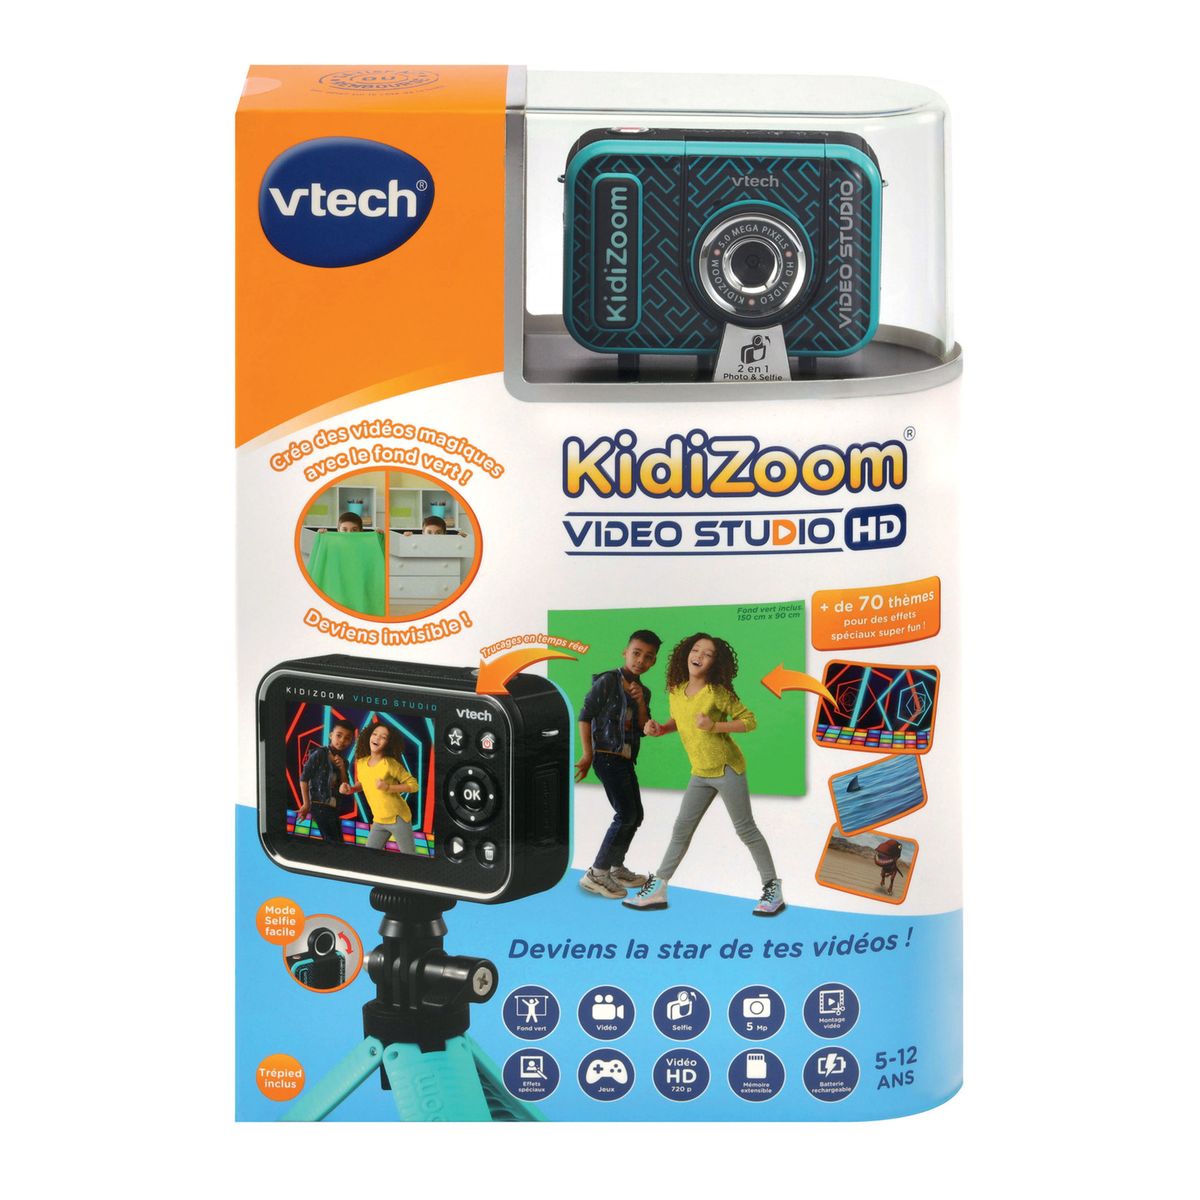 Kidizoom video studio hd multicolore Vtech